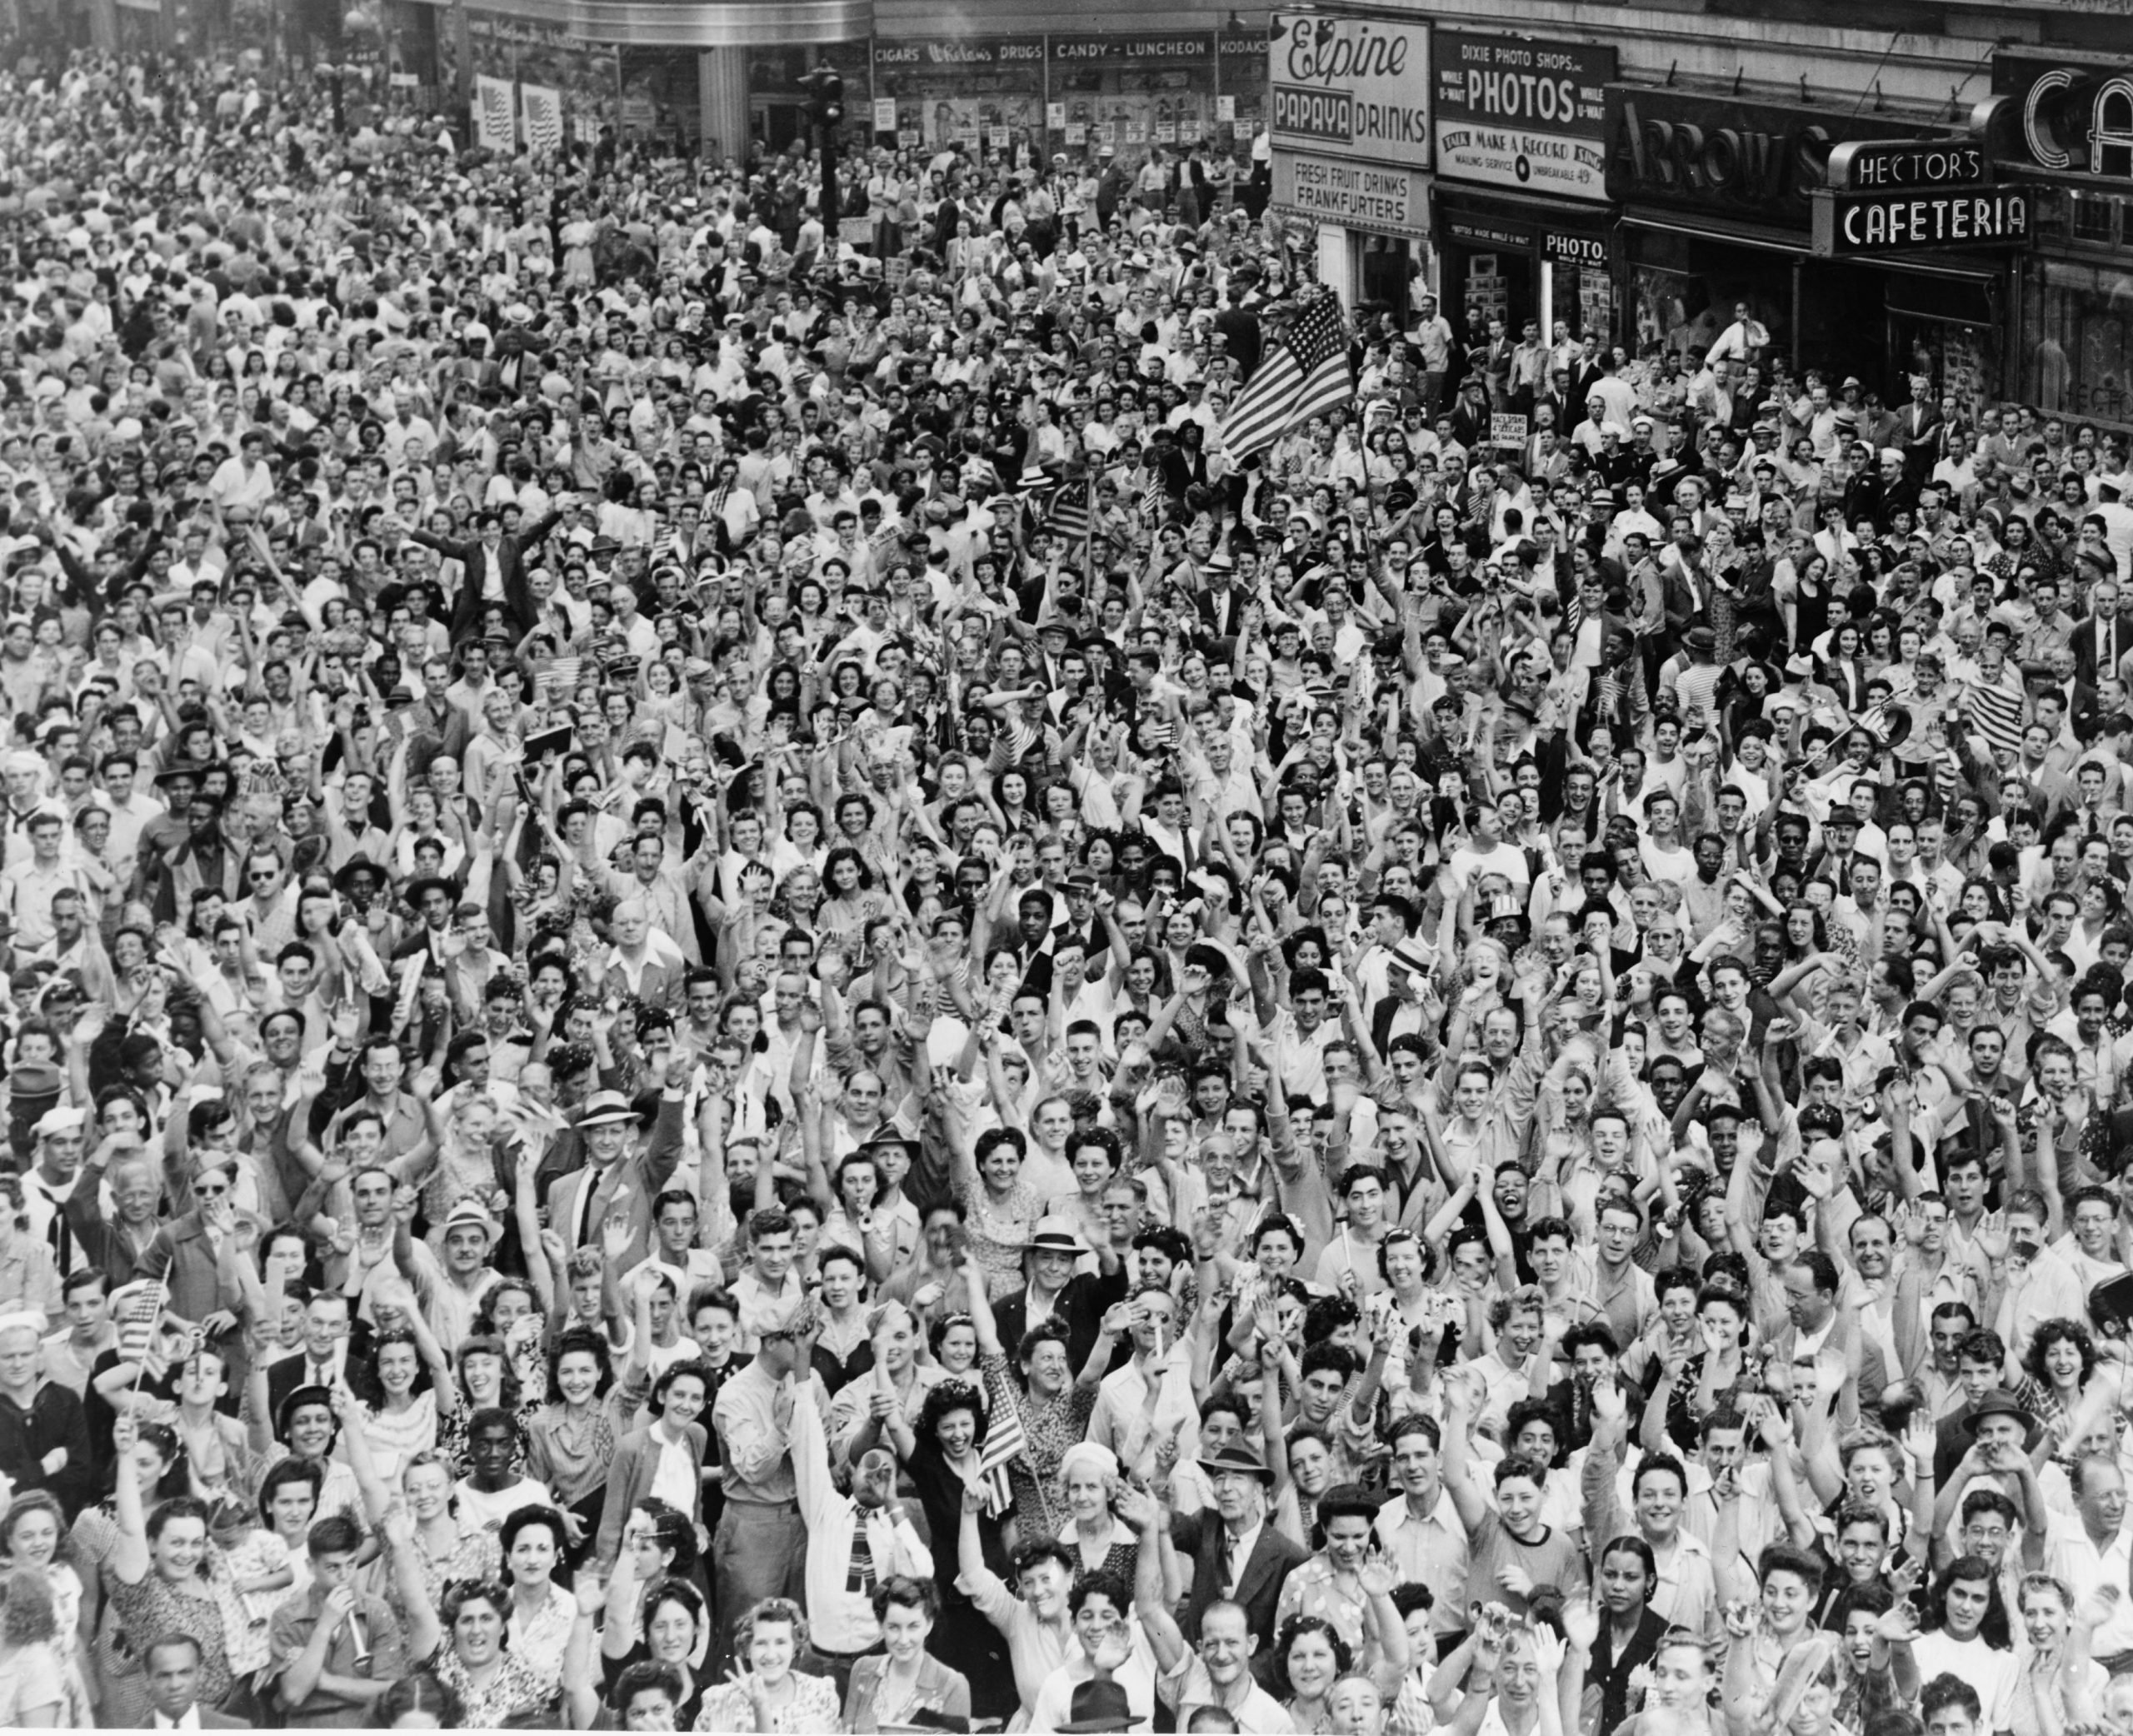 Victory over Japan (V-J) Day in Times Square, September 2, 1945.